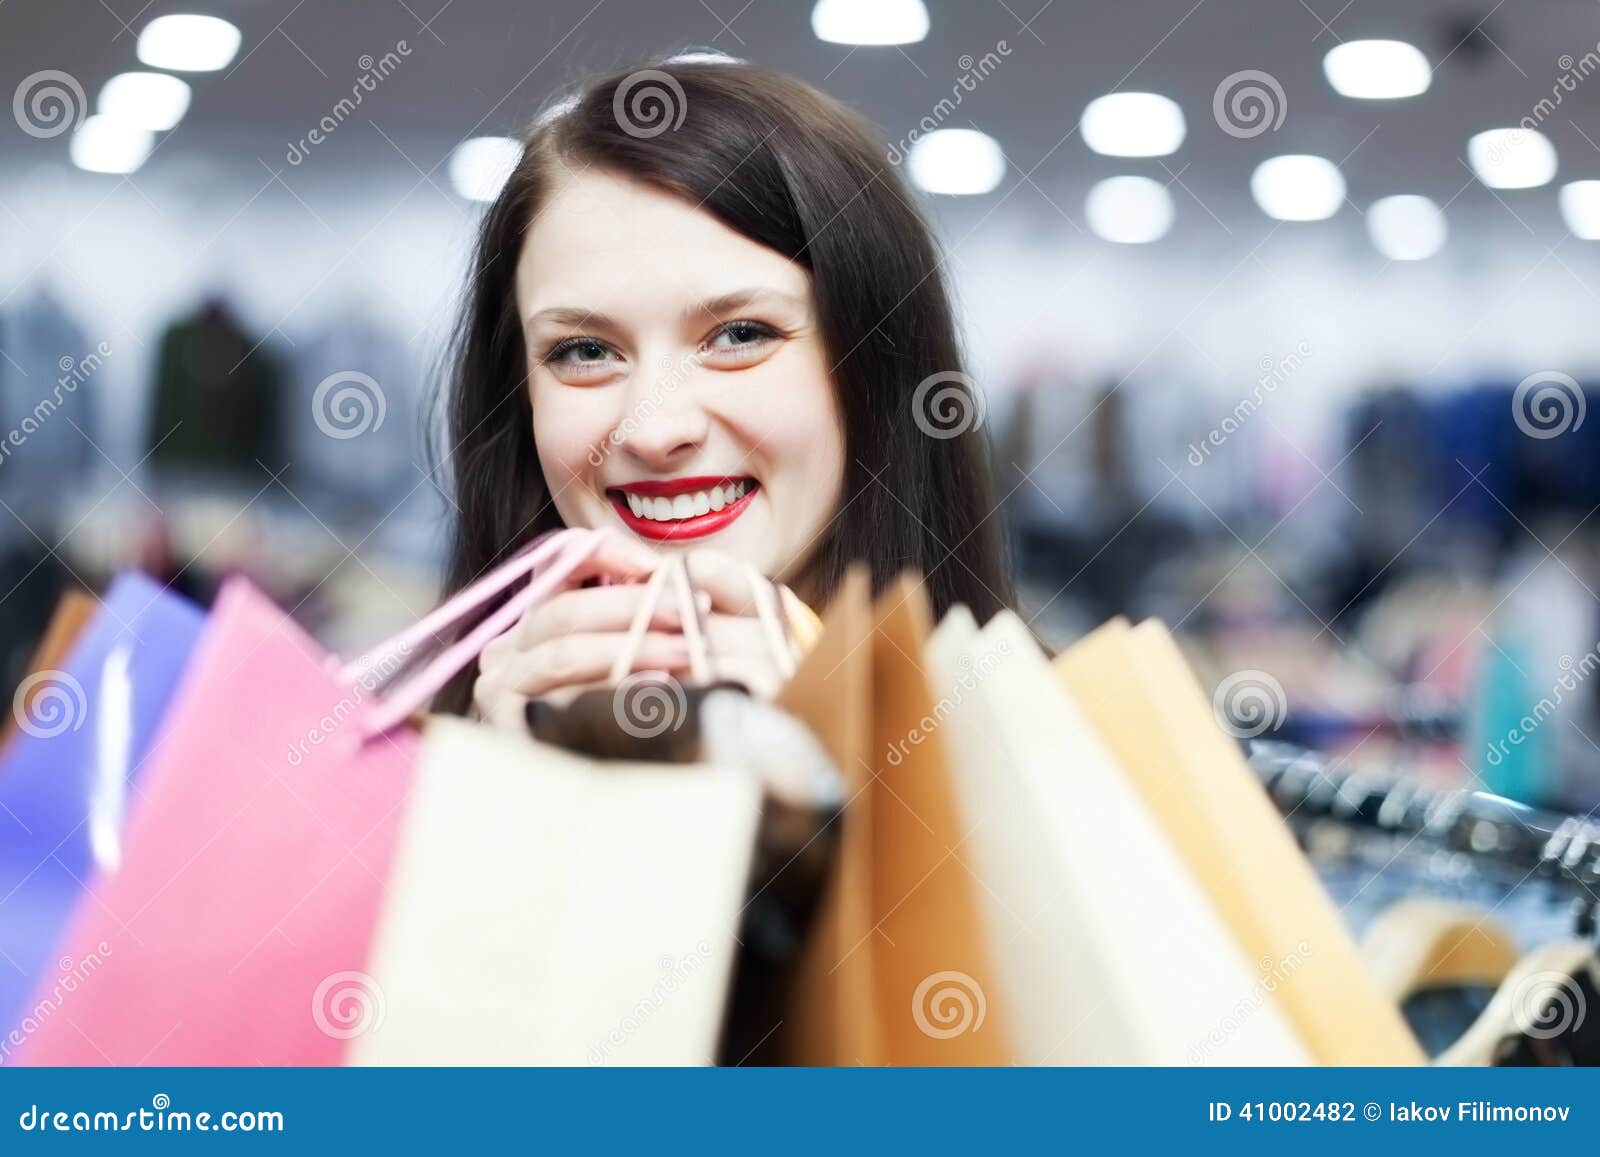 Woman at clothing boutique stock photo. Image of shopaholic - 41002482